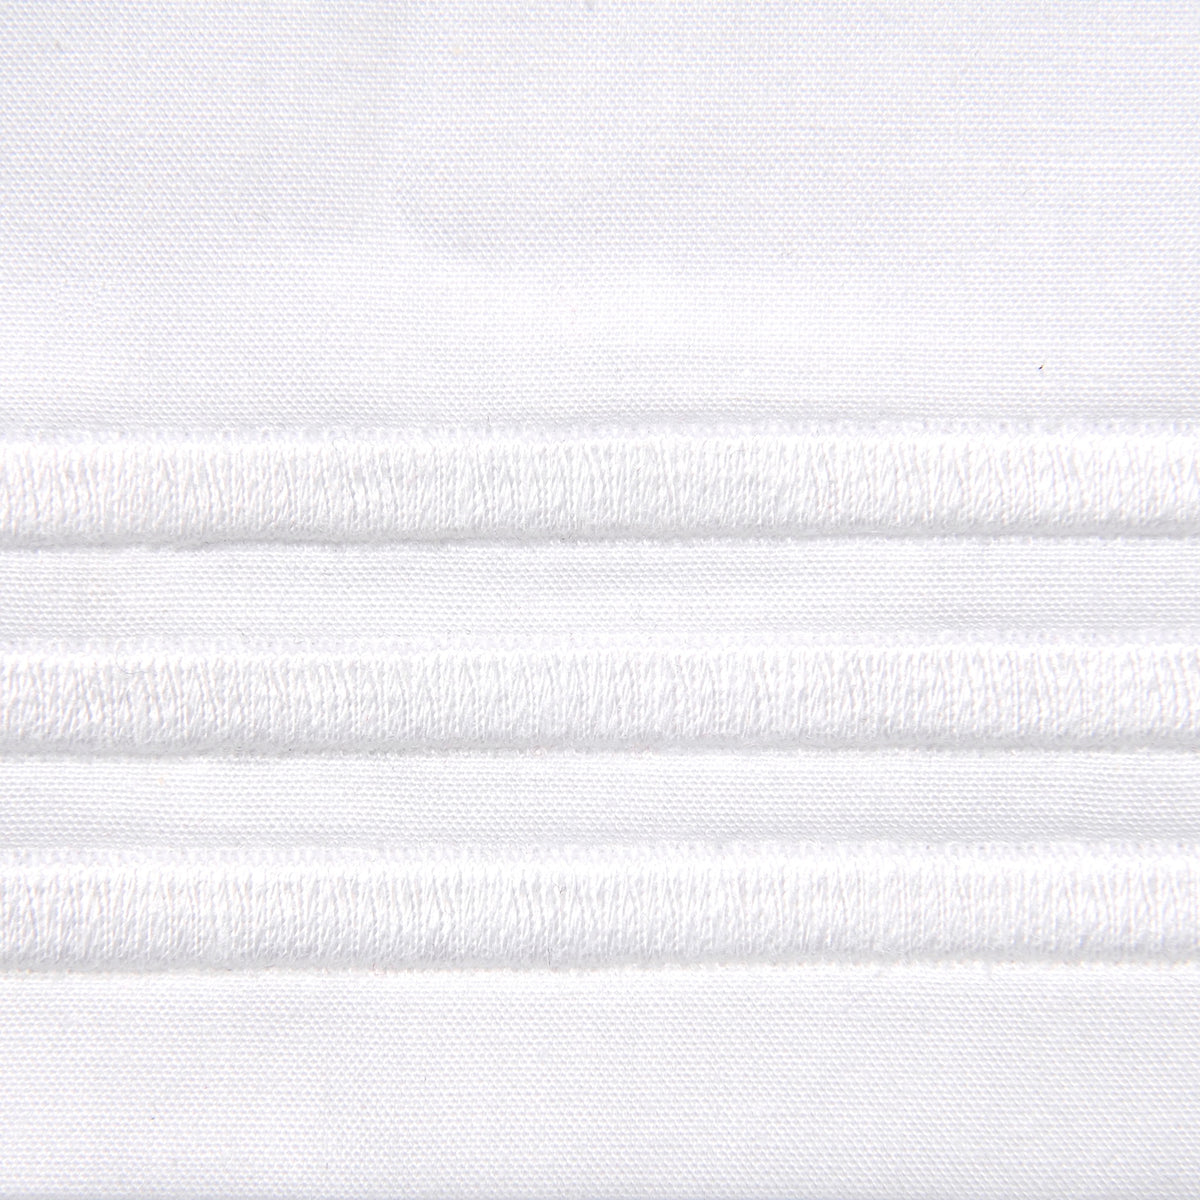 Swatch Sample of Signoria Platinum Percale Bedding in White/White Color